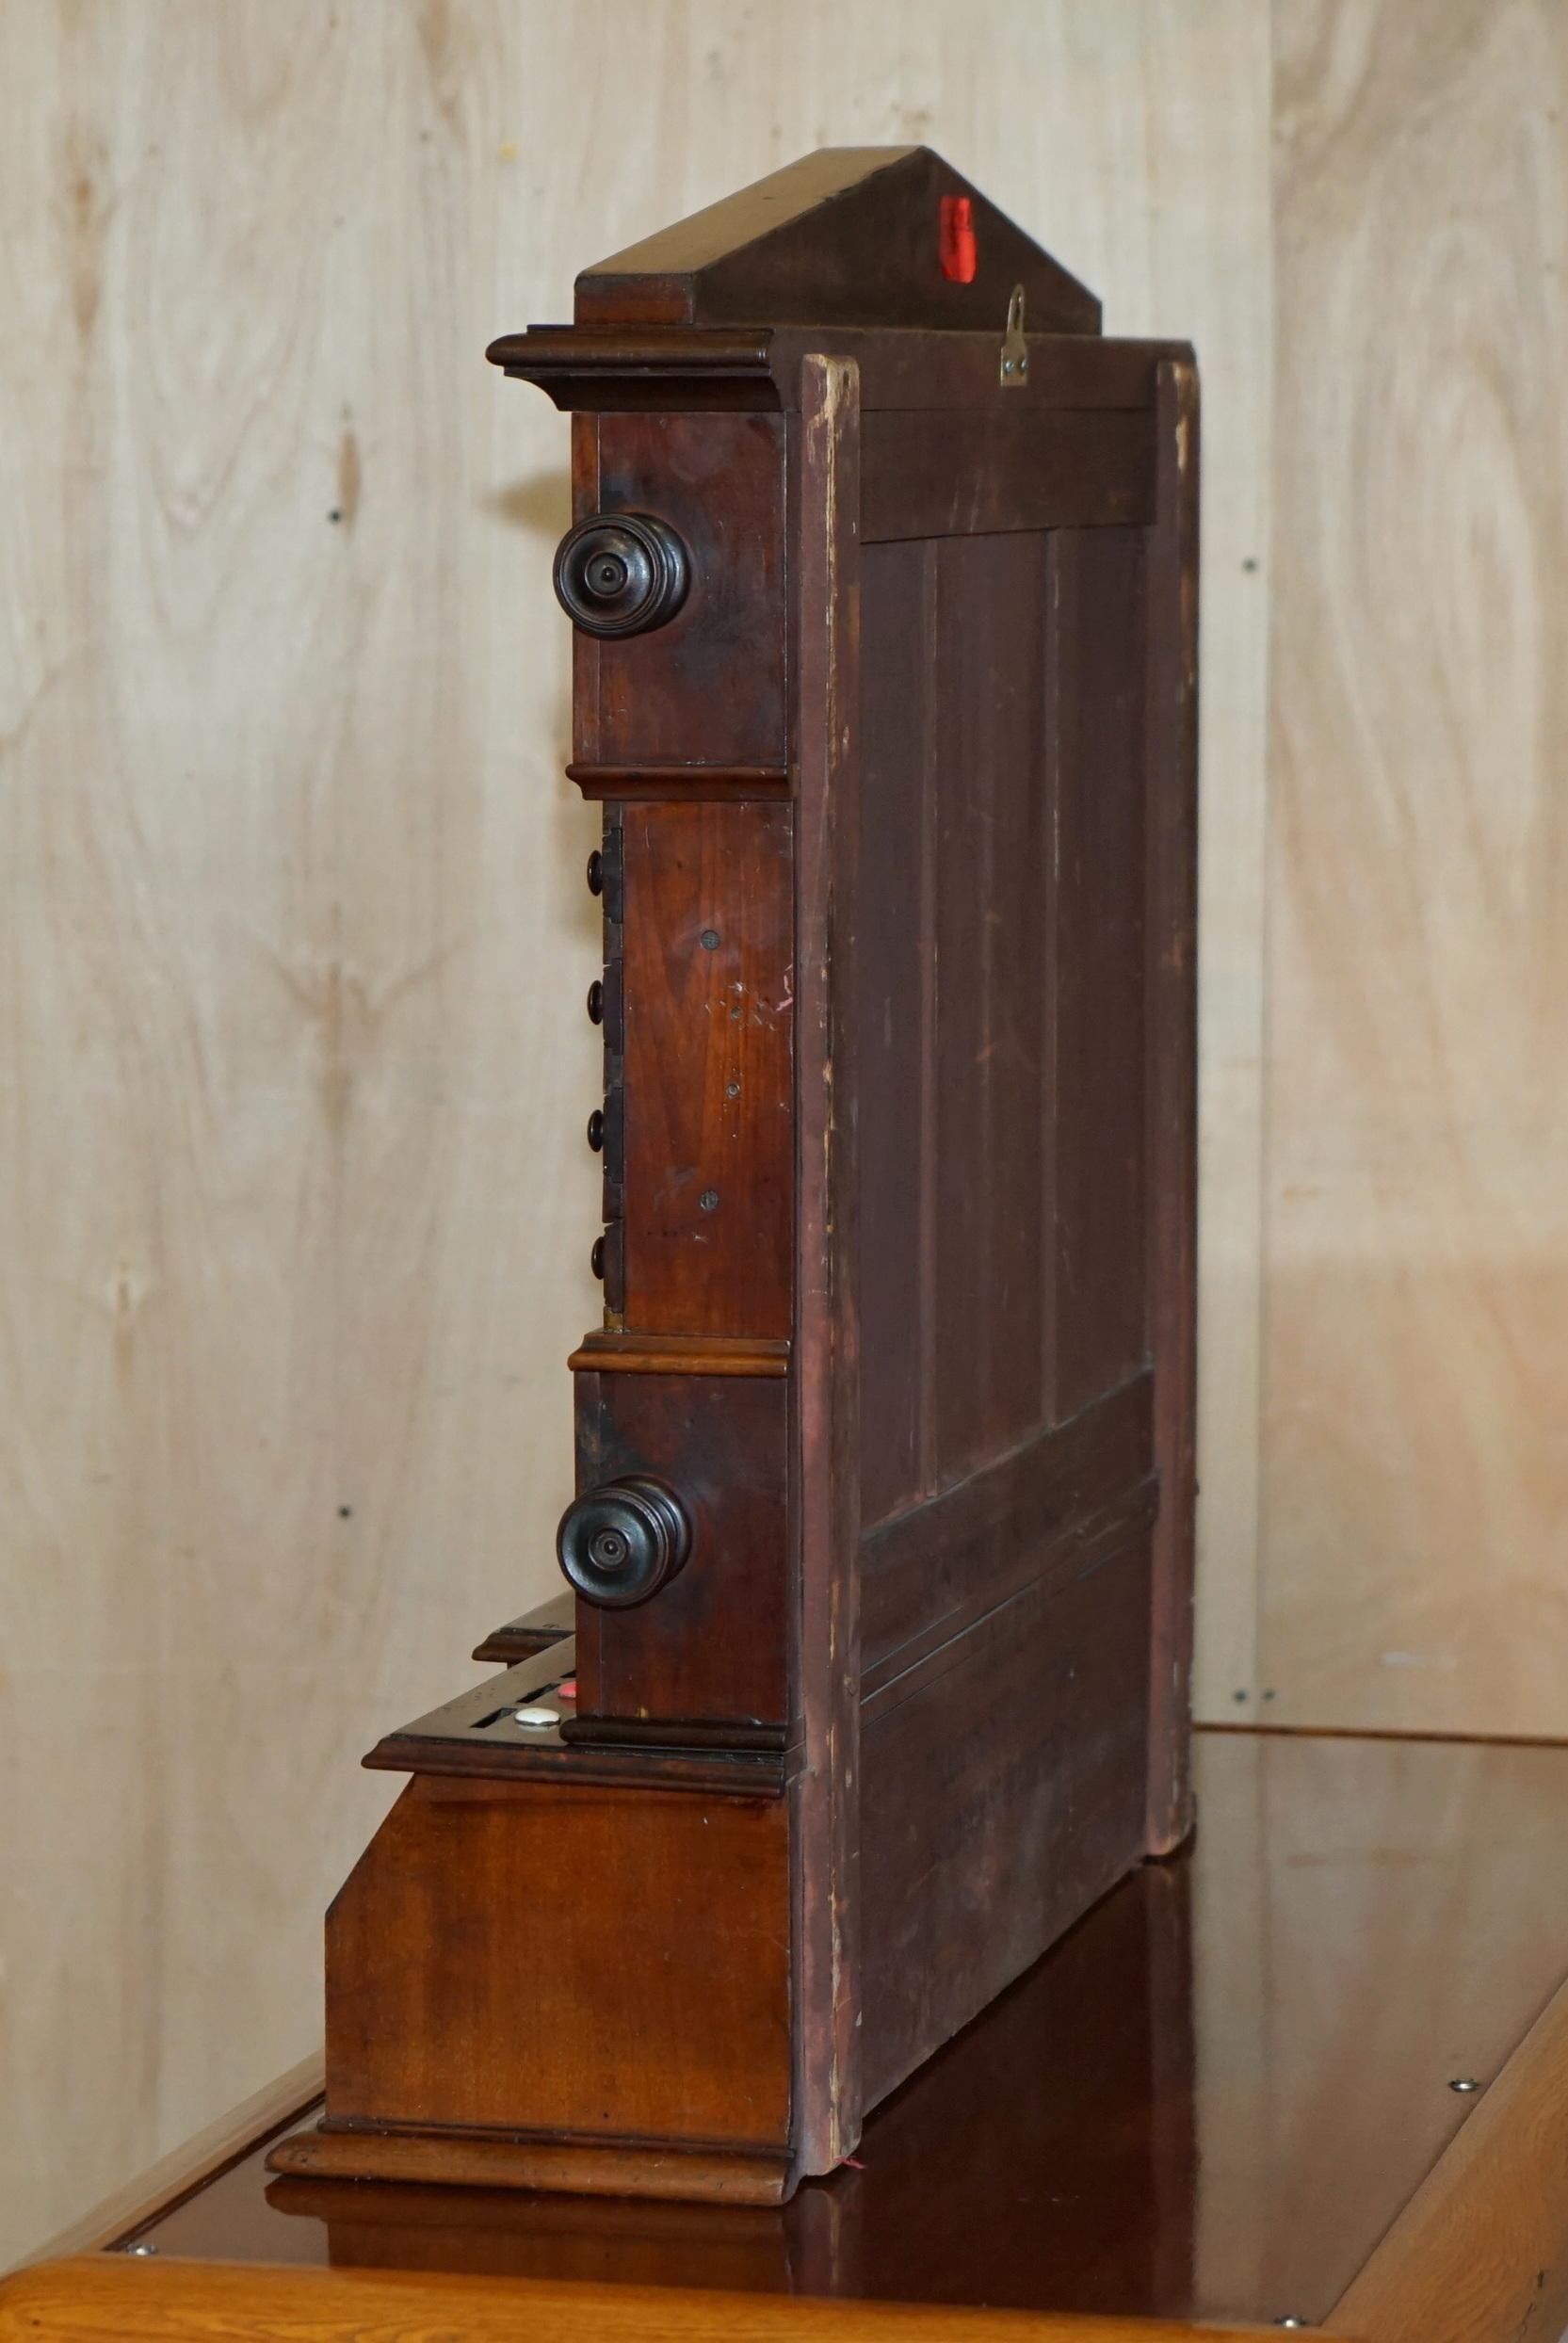 ANTIQUE ViCTORIAN STEVEN & SON'S EST 1830 REGENT STREET SNOOKER SCORE BOARD For Sale 9